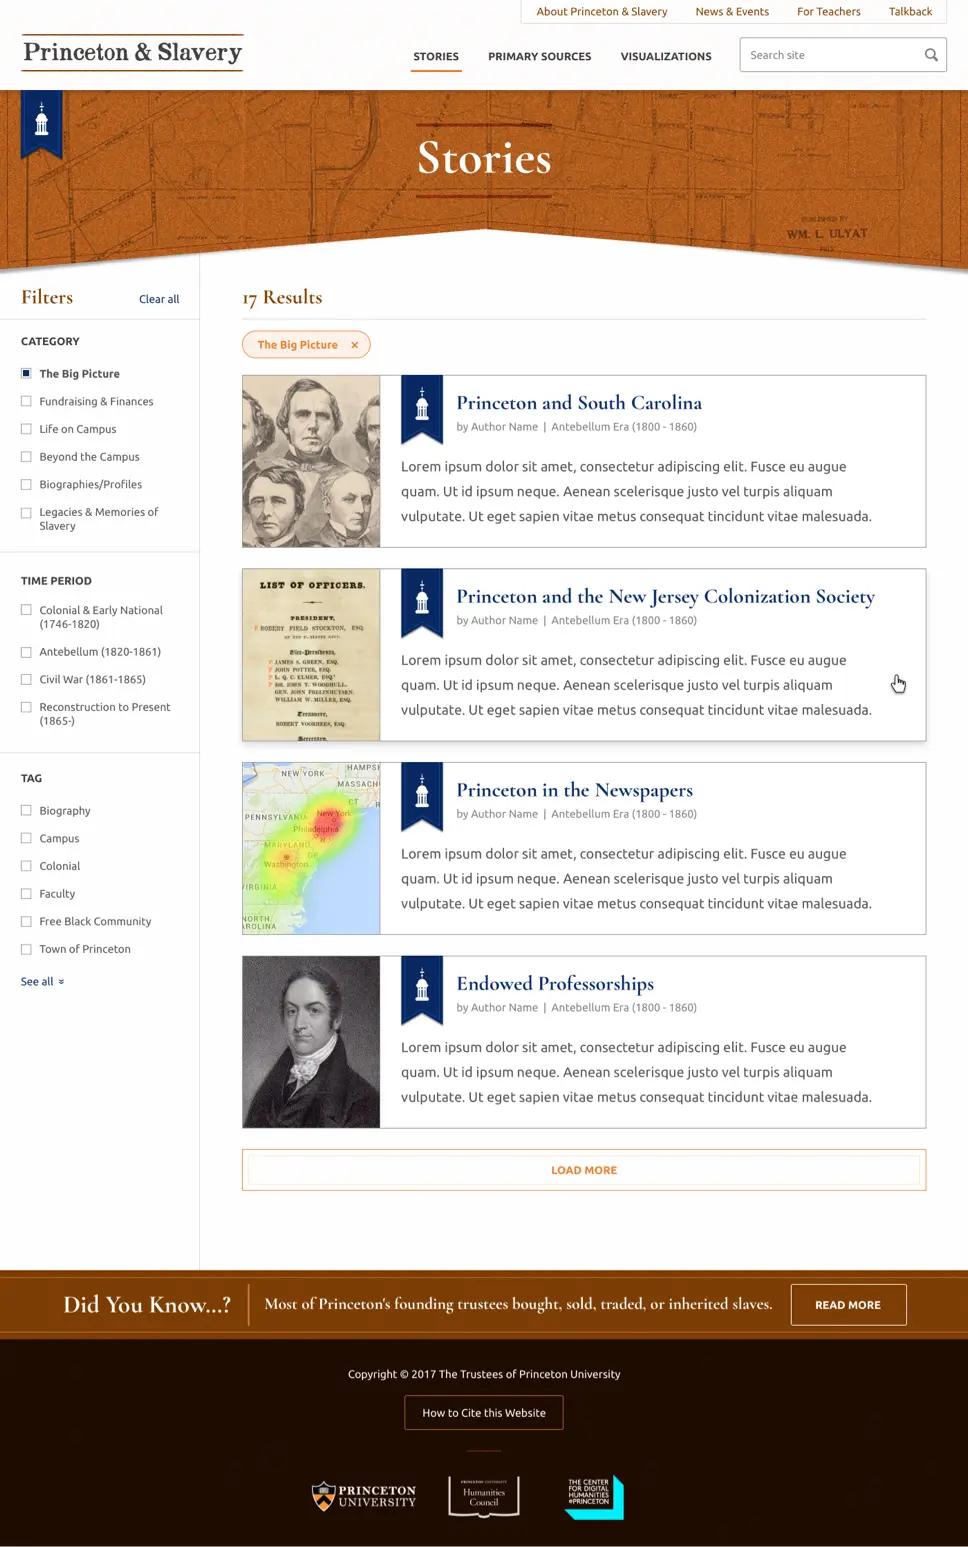 A screenshot of Princeton & Slavery's "Stories" page.